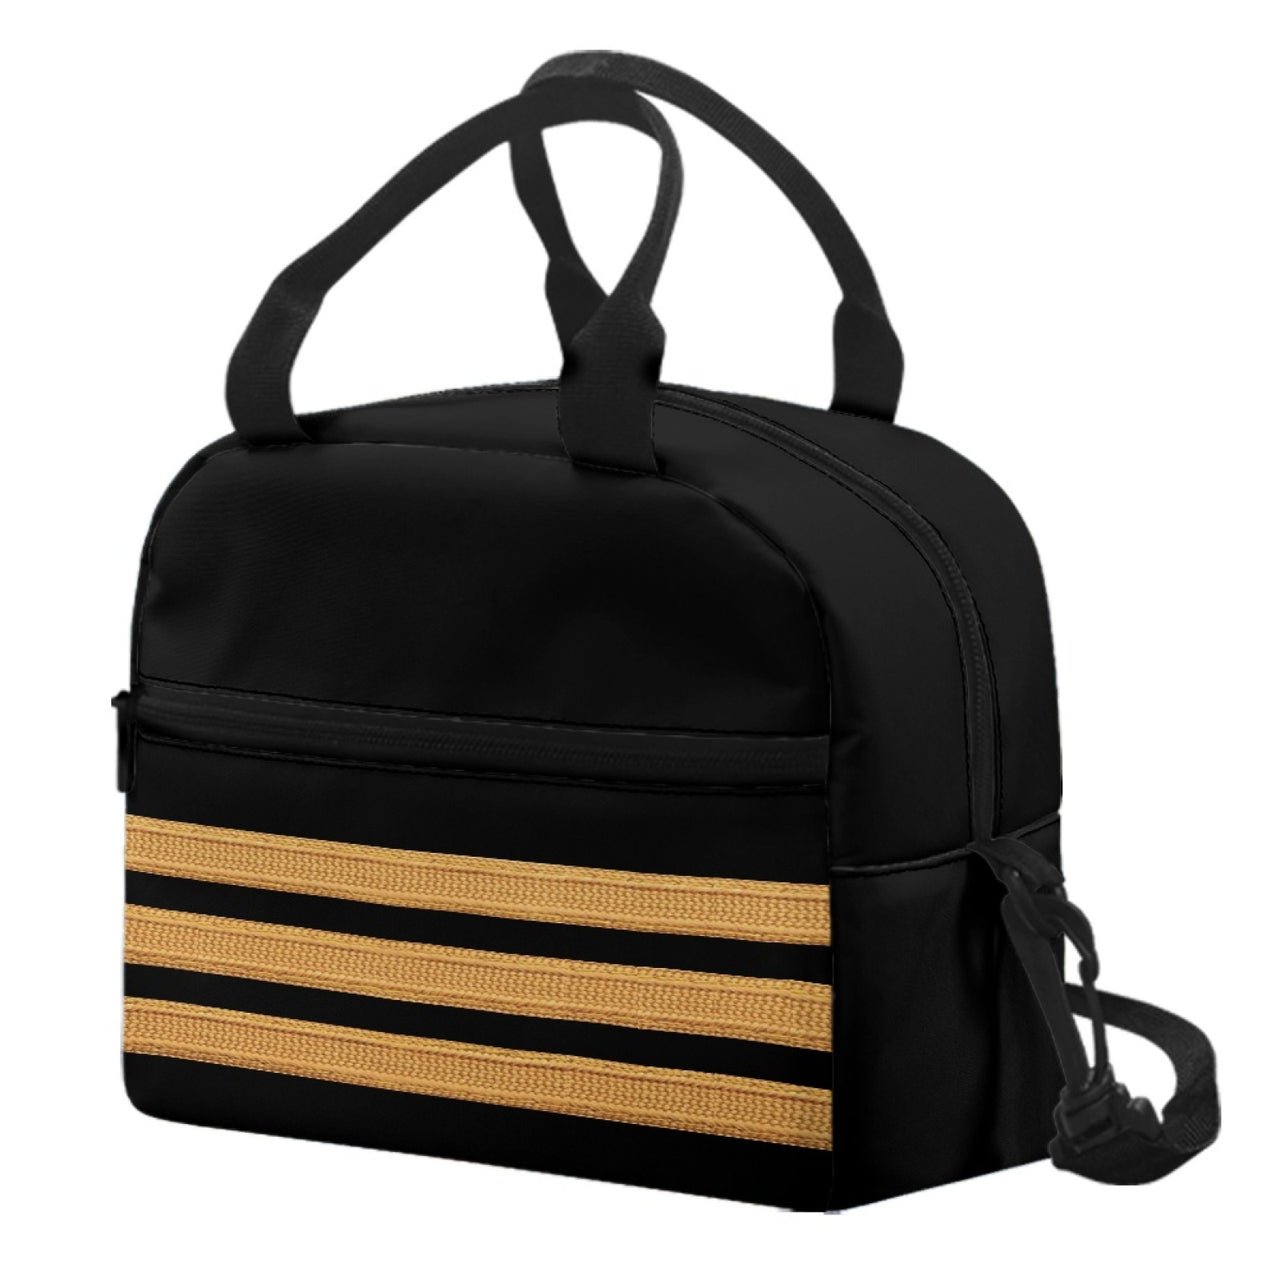 Golden Pilot Epaulettes (4,3,2 Lines) Designed Lunch Bags